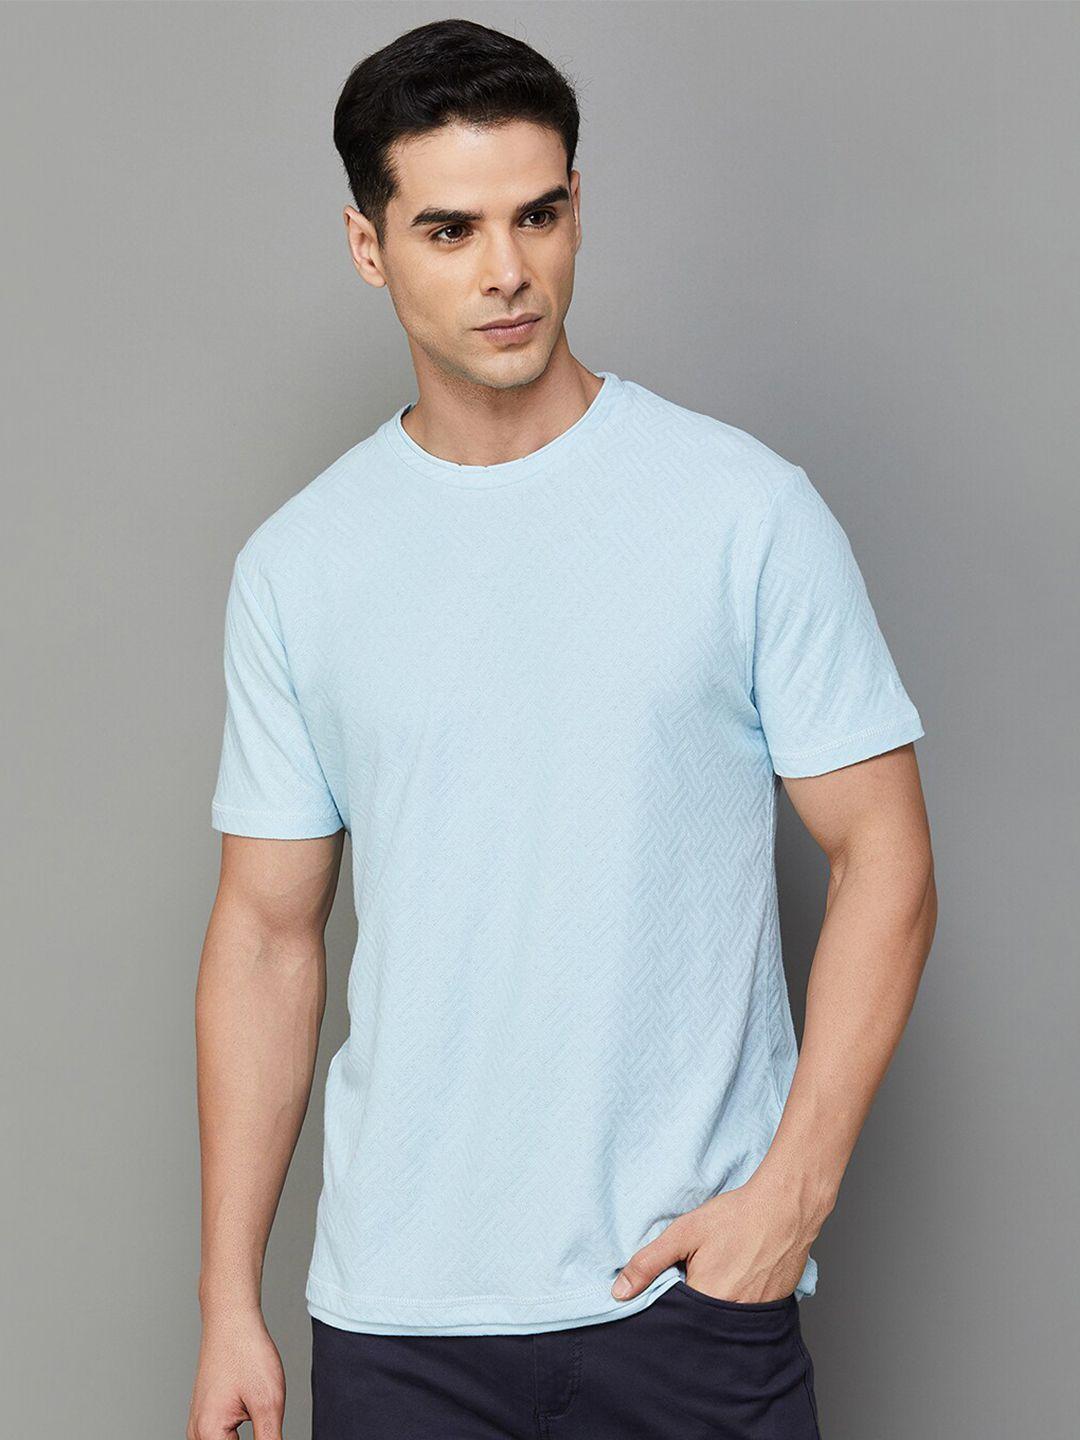 melange by lifestyle round neck short sleeves cotton t-shirt